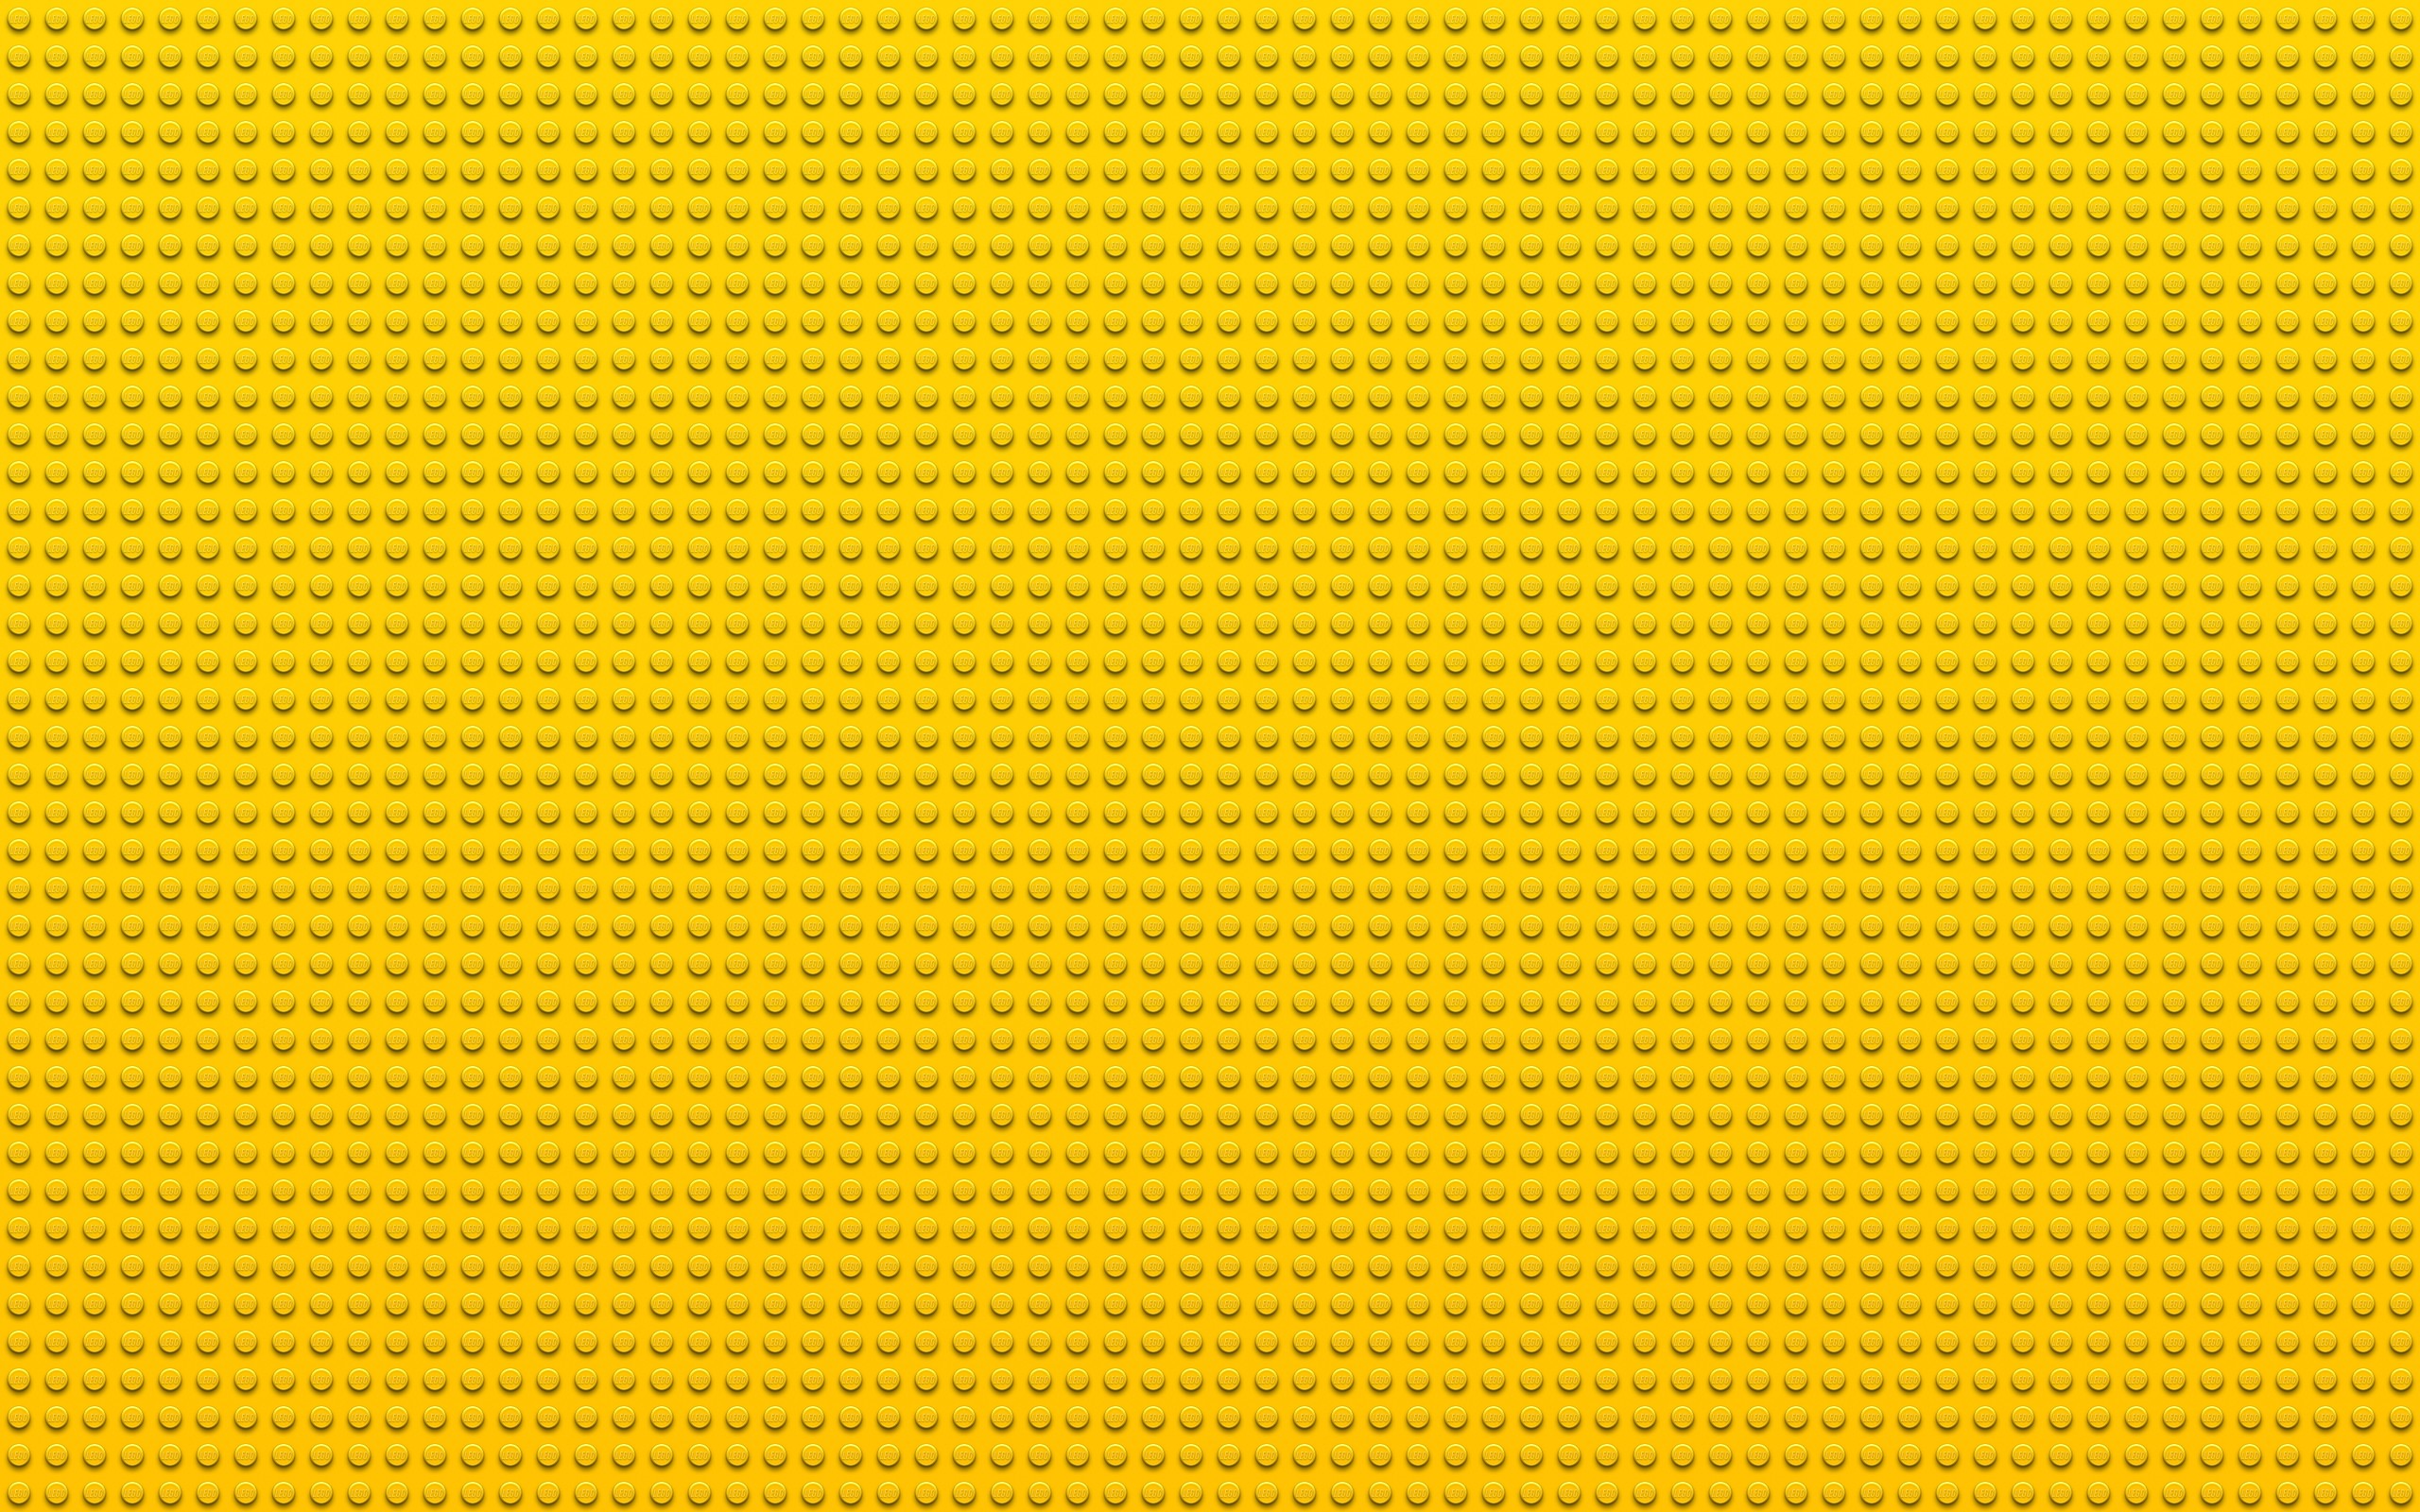 Lego yellow textures dots wallpaper 2560x1600 11692 WallpaperUP 2560x1600